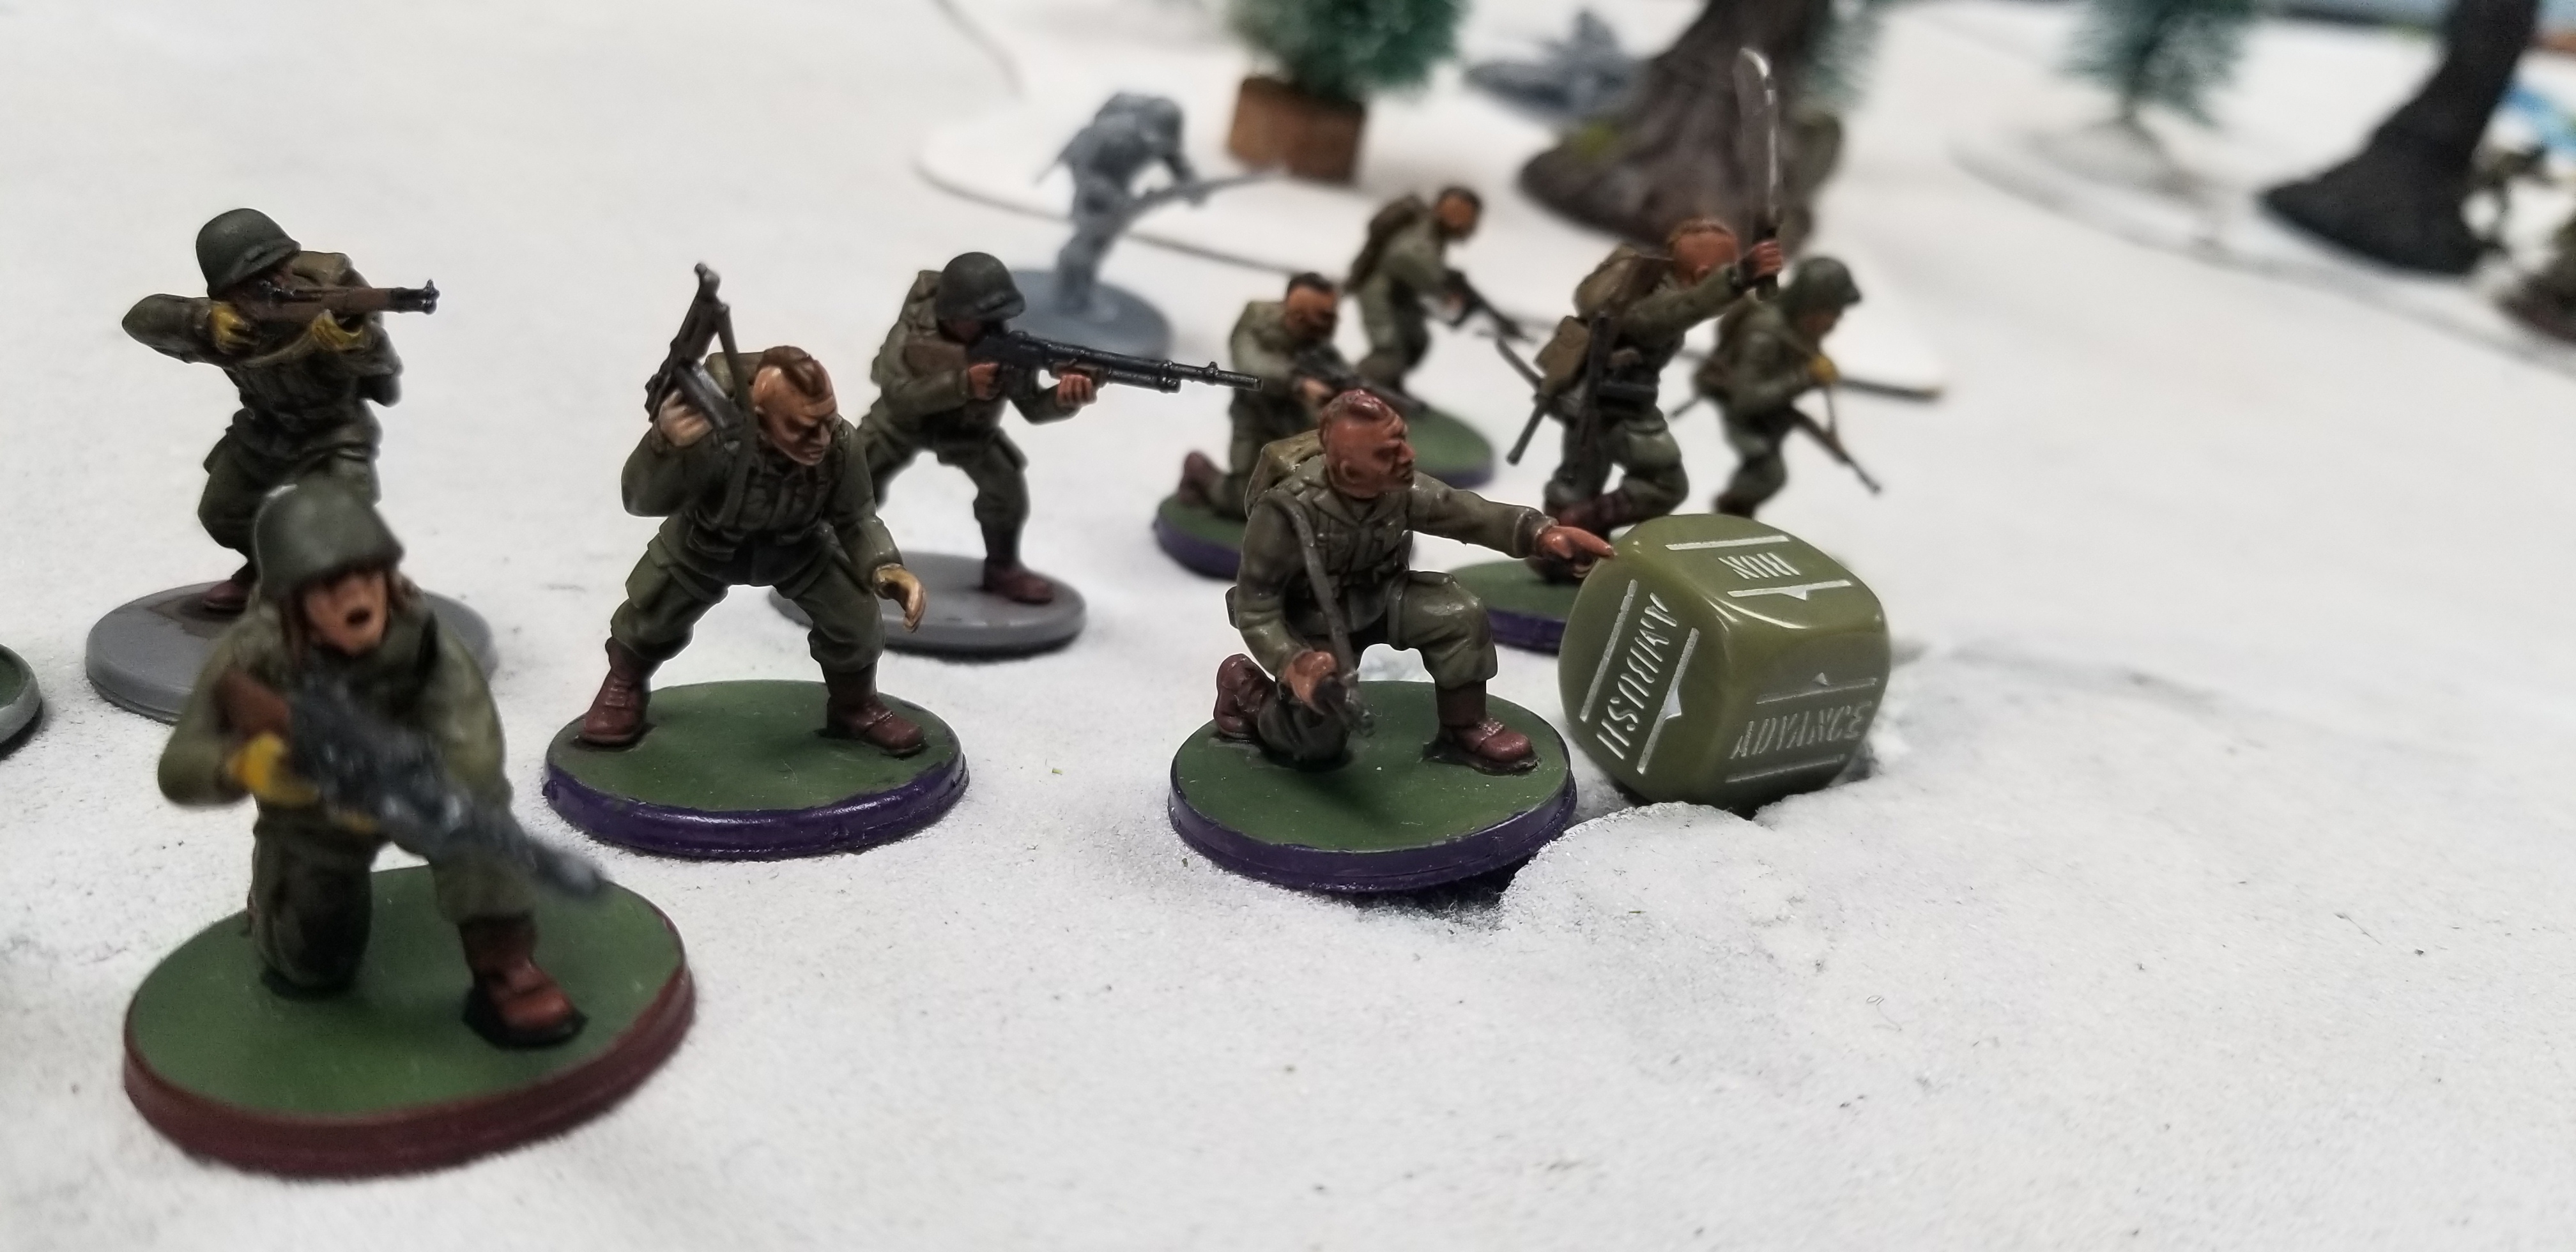 Captain's Avengers versus kampfgruppen smiledge in a fierce infantry engagement